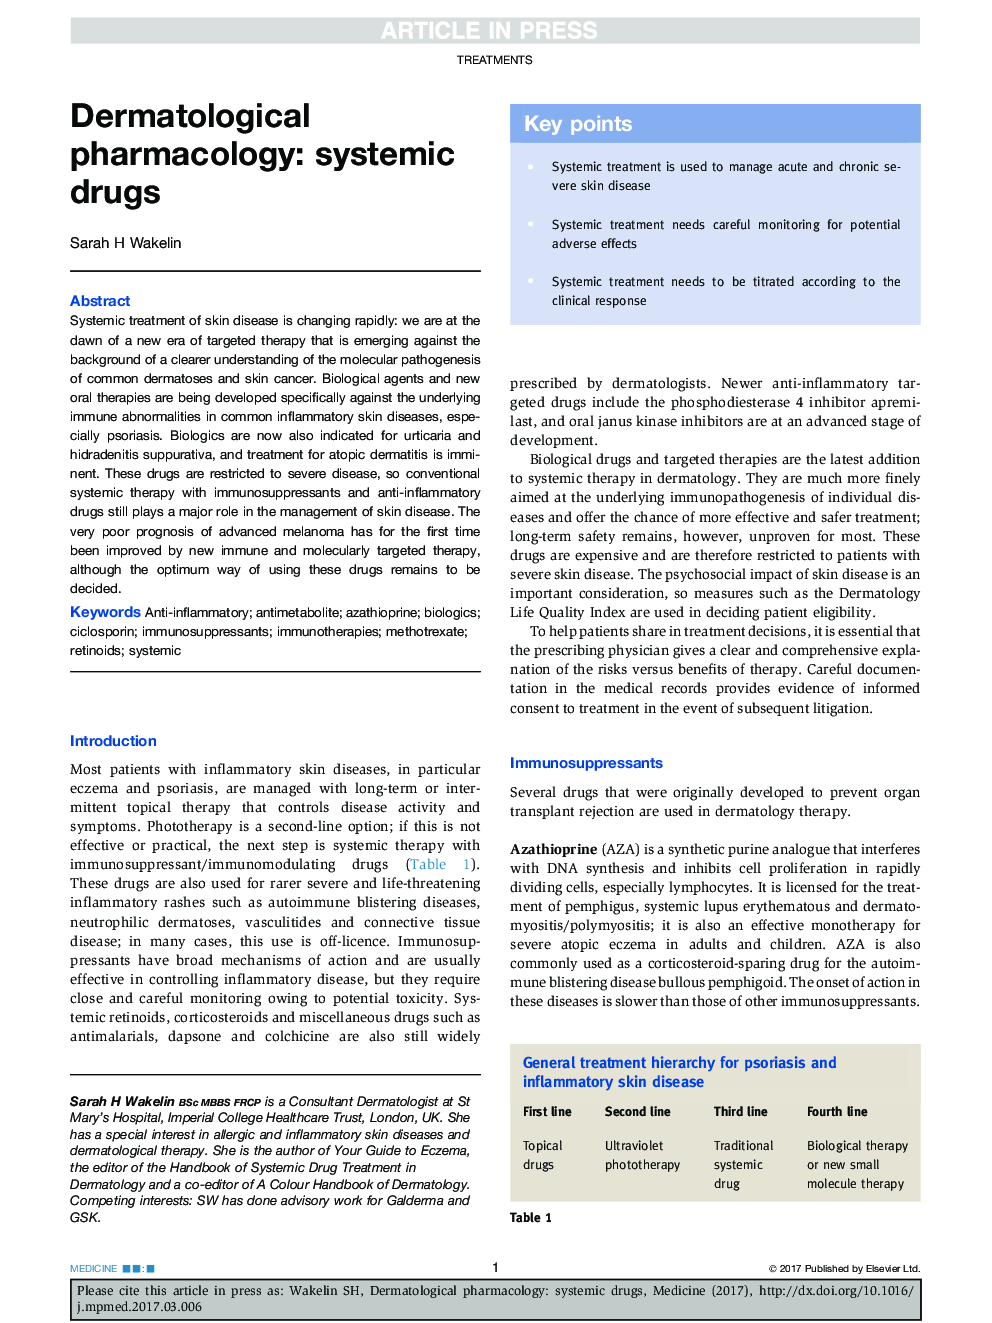 Dermatological pharmacology: systemic drugs